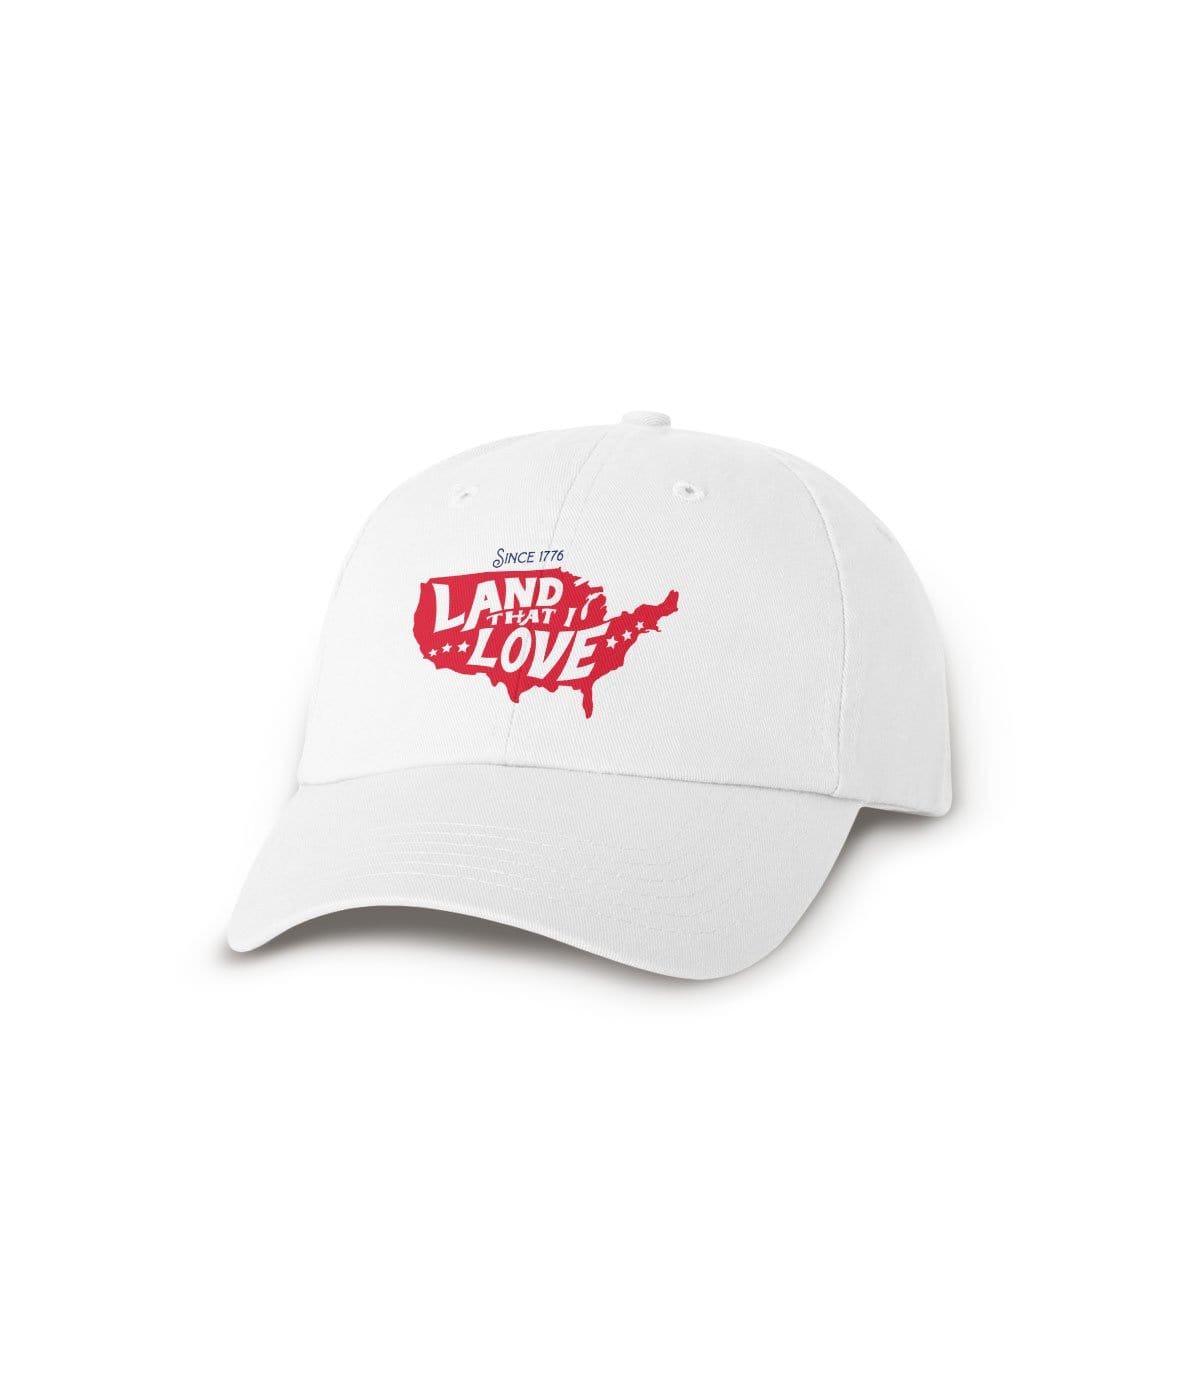 Shop Unisex Hat Land That I Love | Best Hat - Nayked Apparel